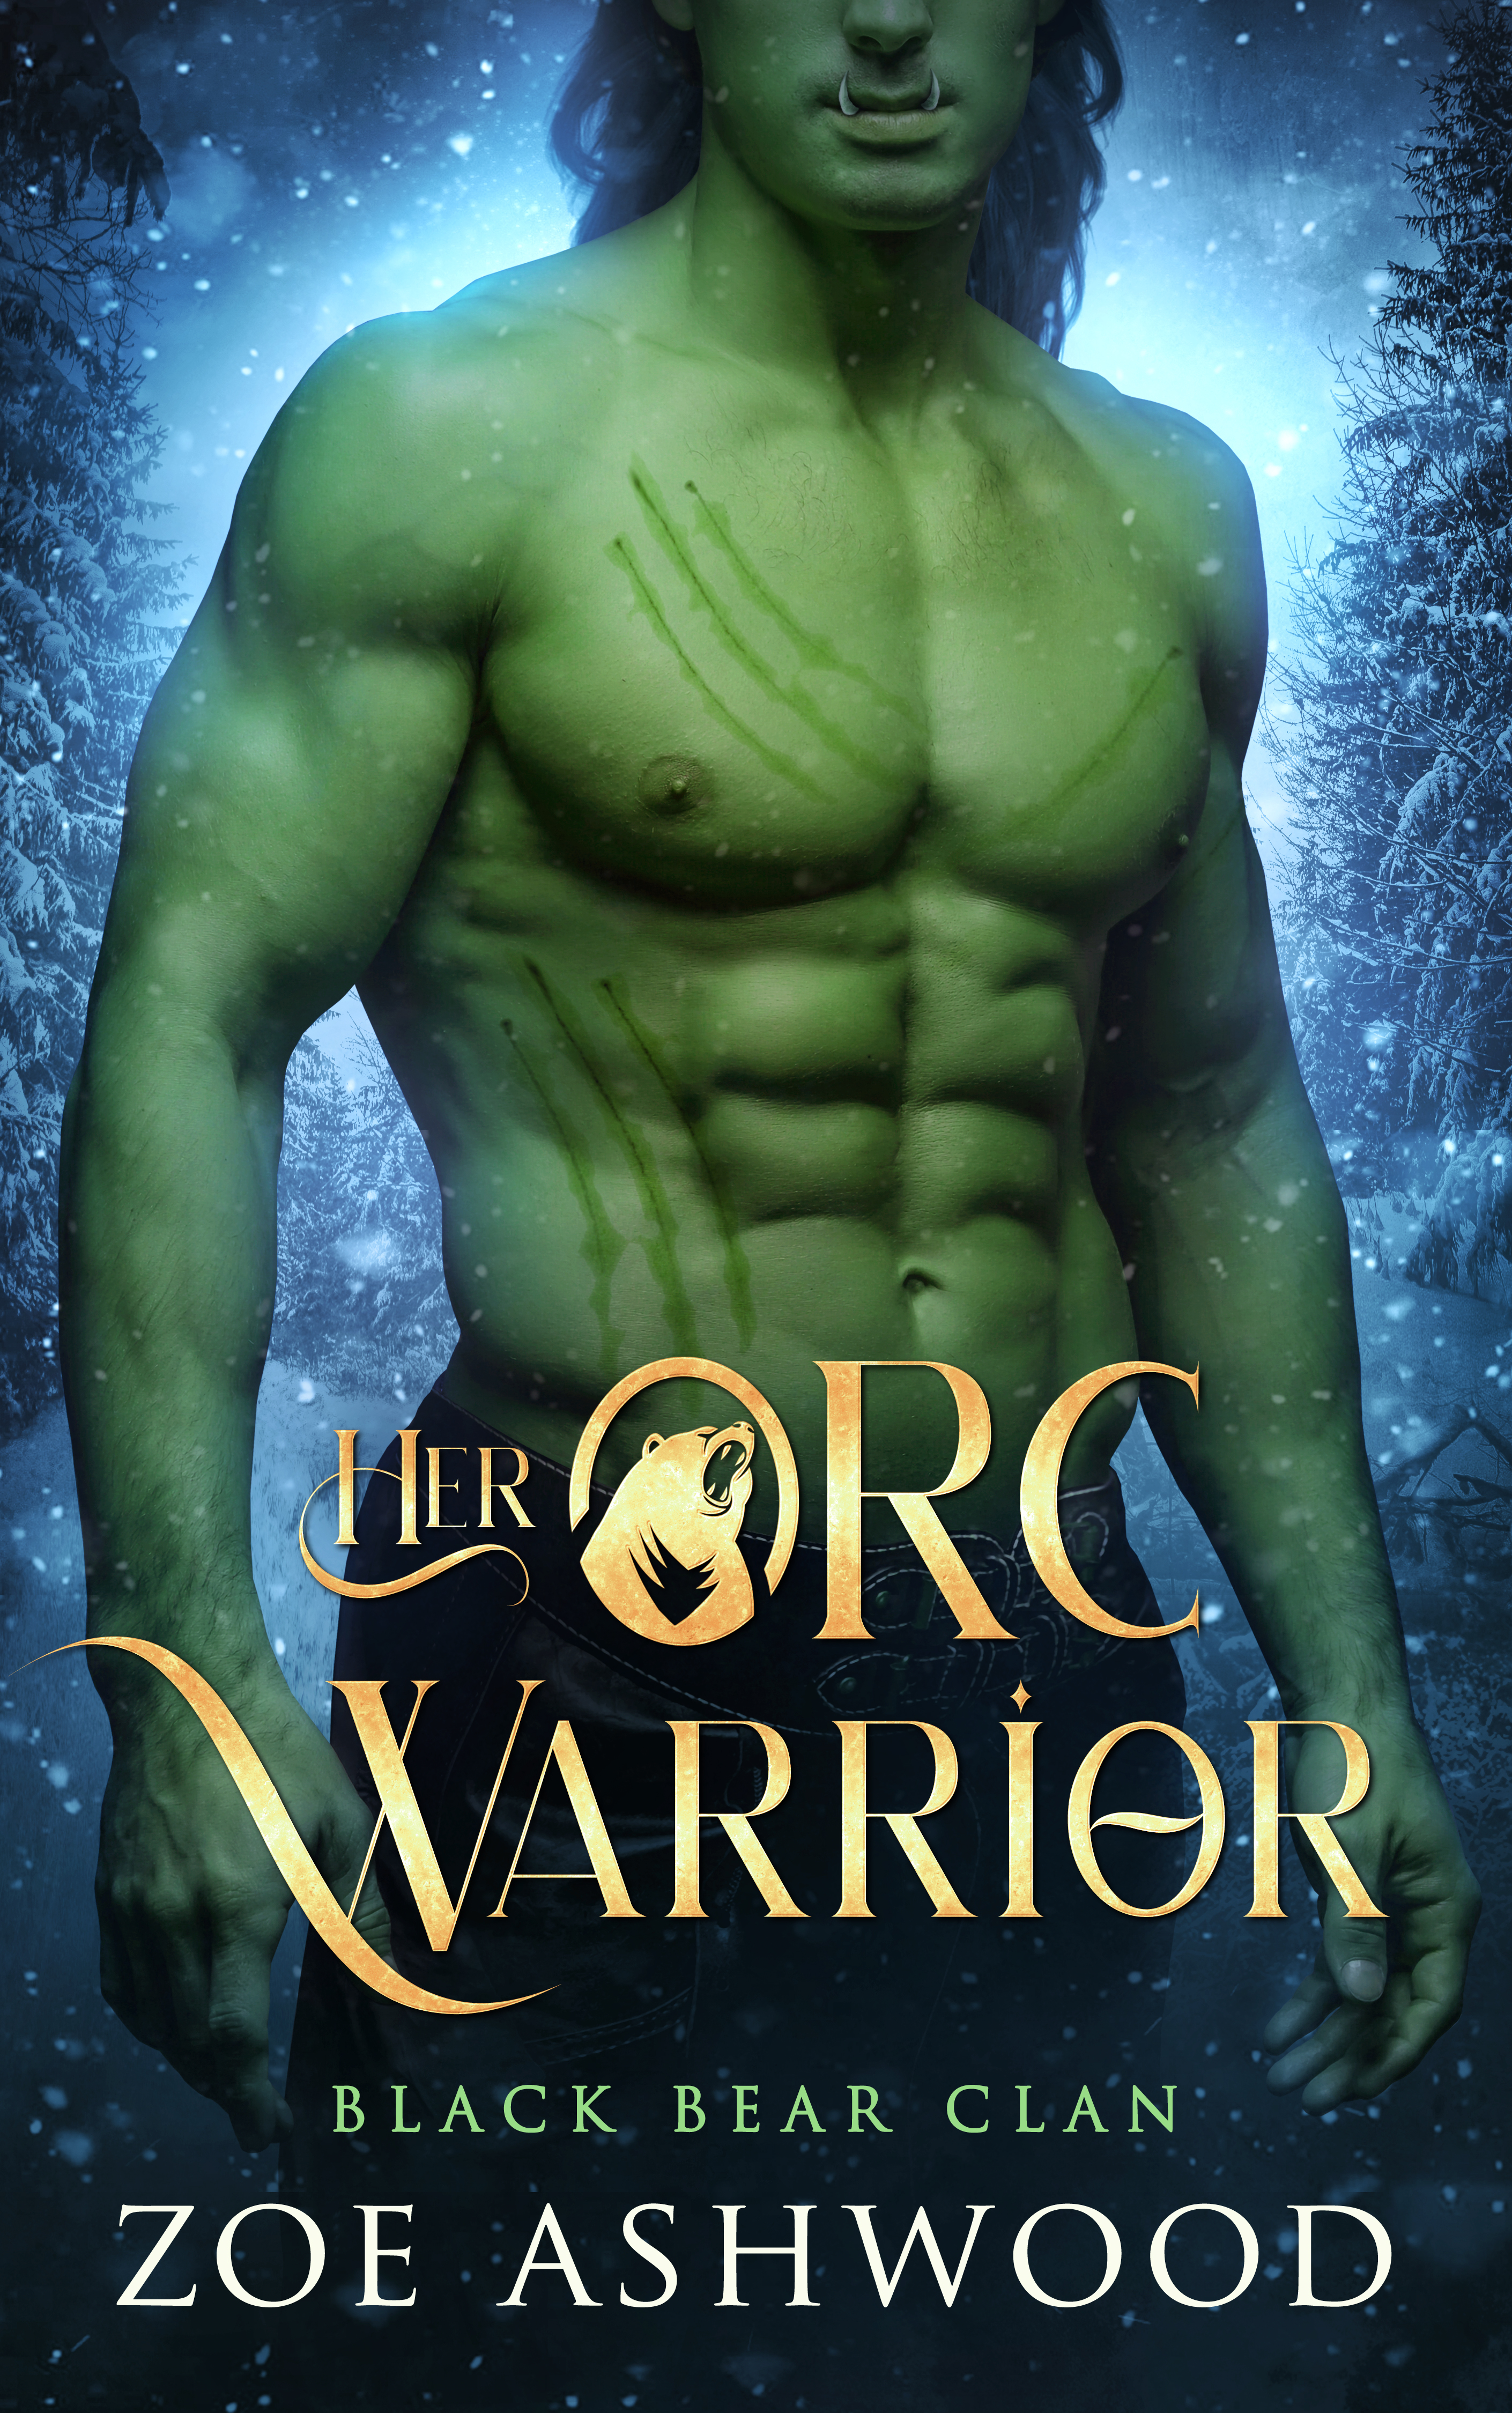 Her Orc Warrior - Black Bear Clan - Zoe Ashwood - A Monster Fantasy Romance